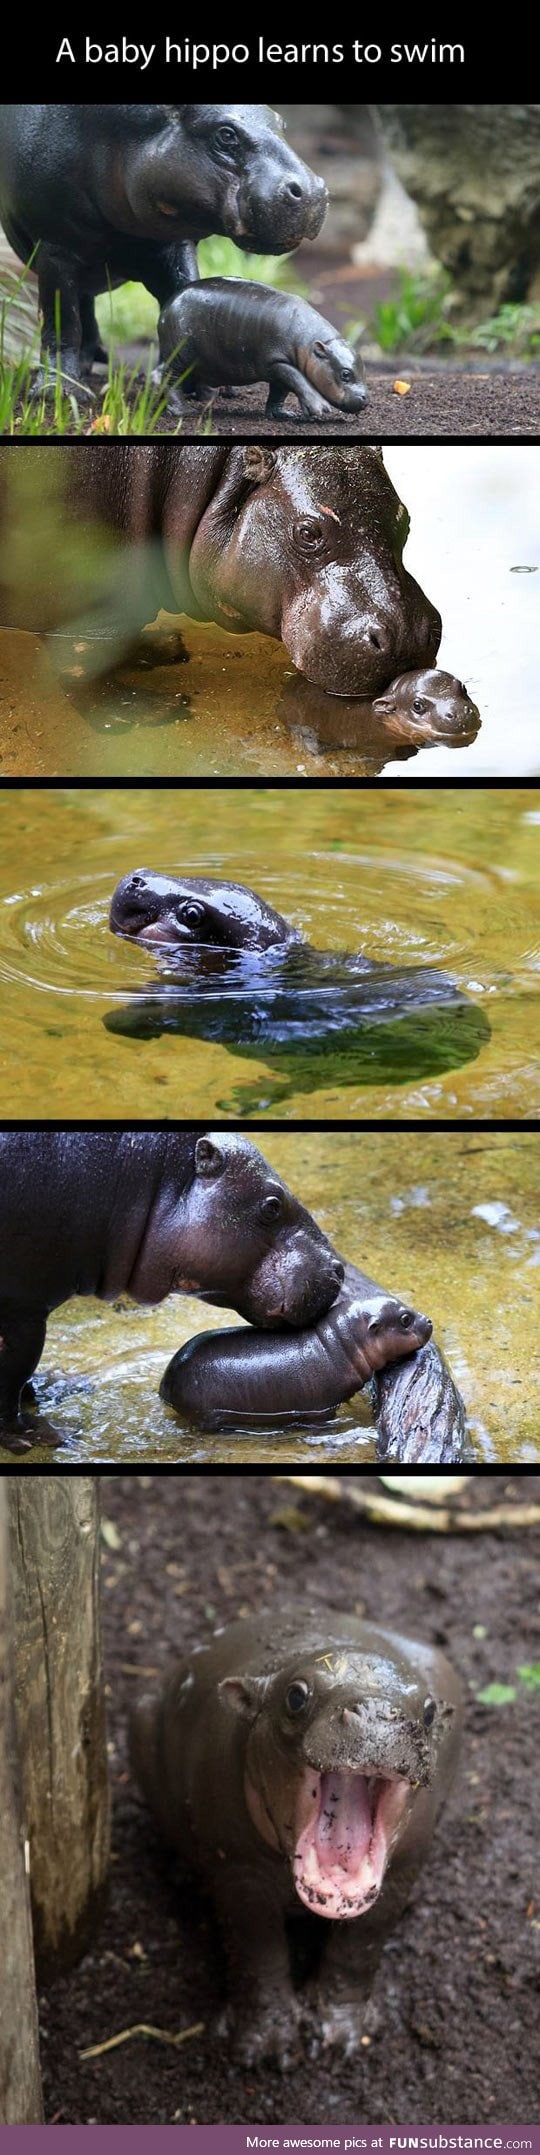 This baby hippo makes me happy